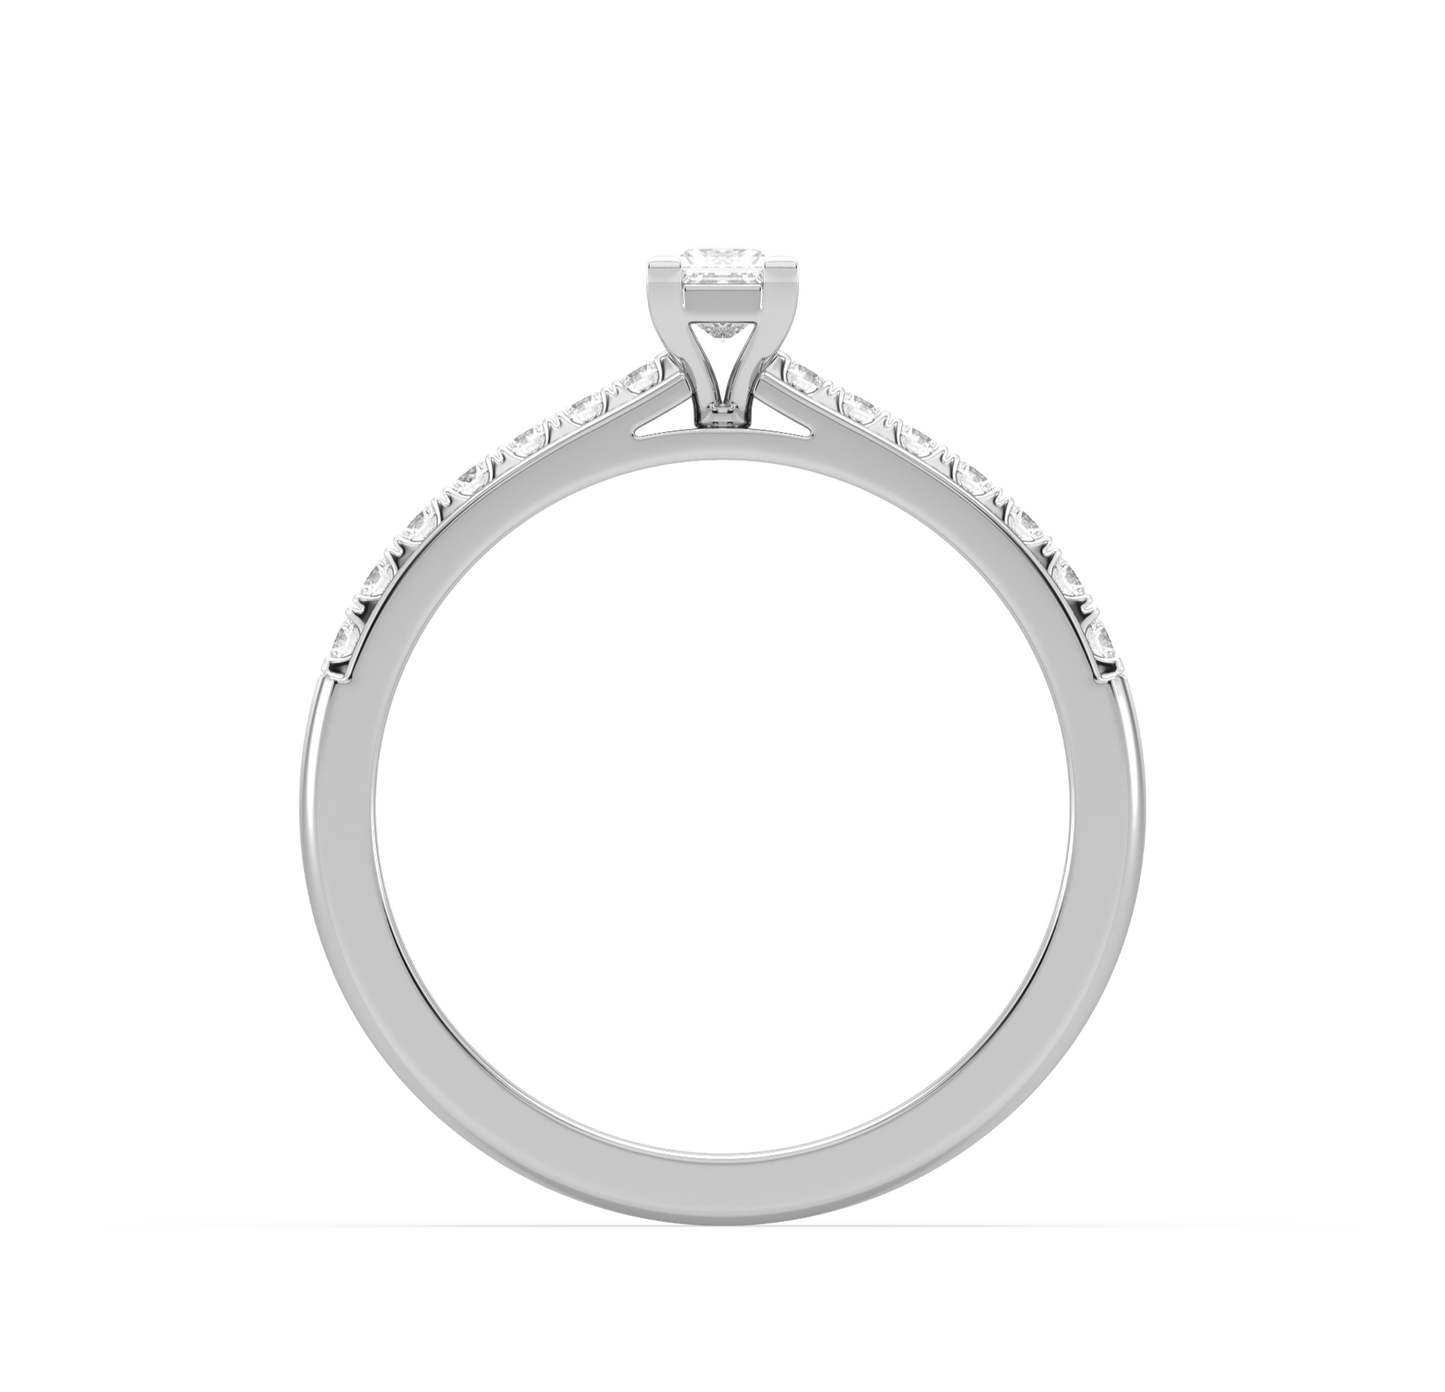 Customised ring RG21007-PH21001